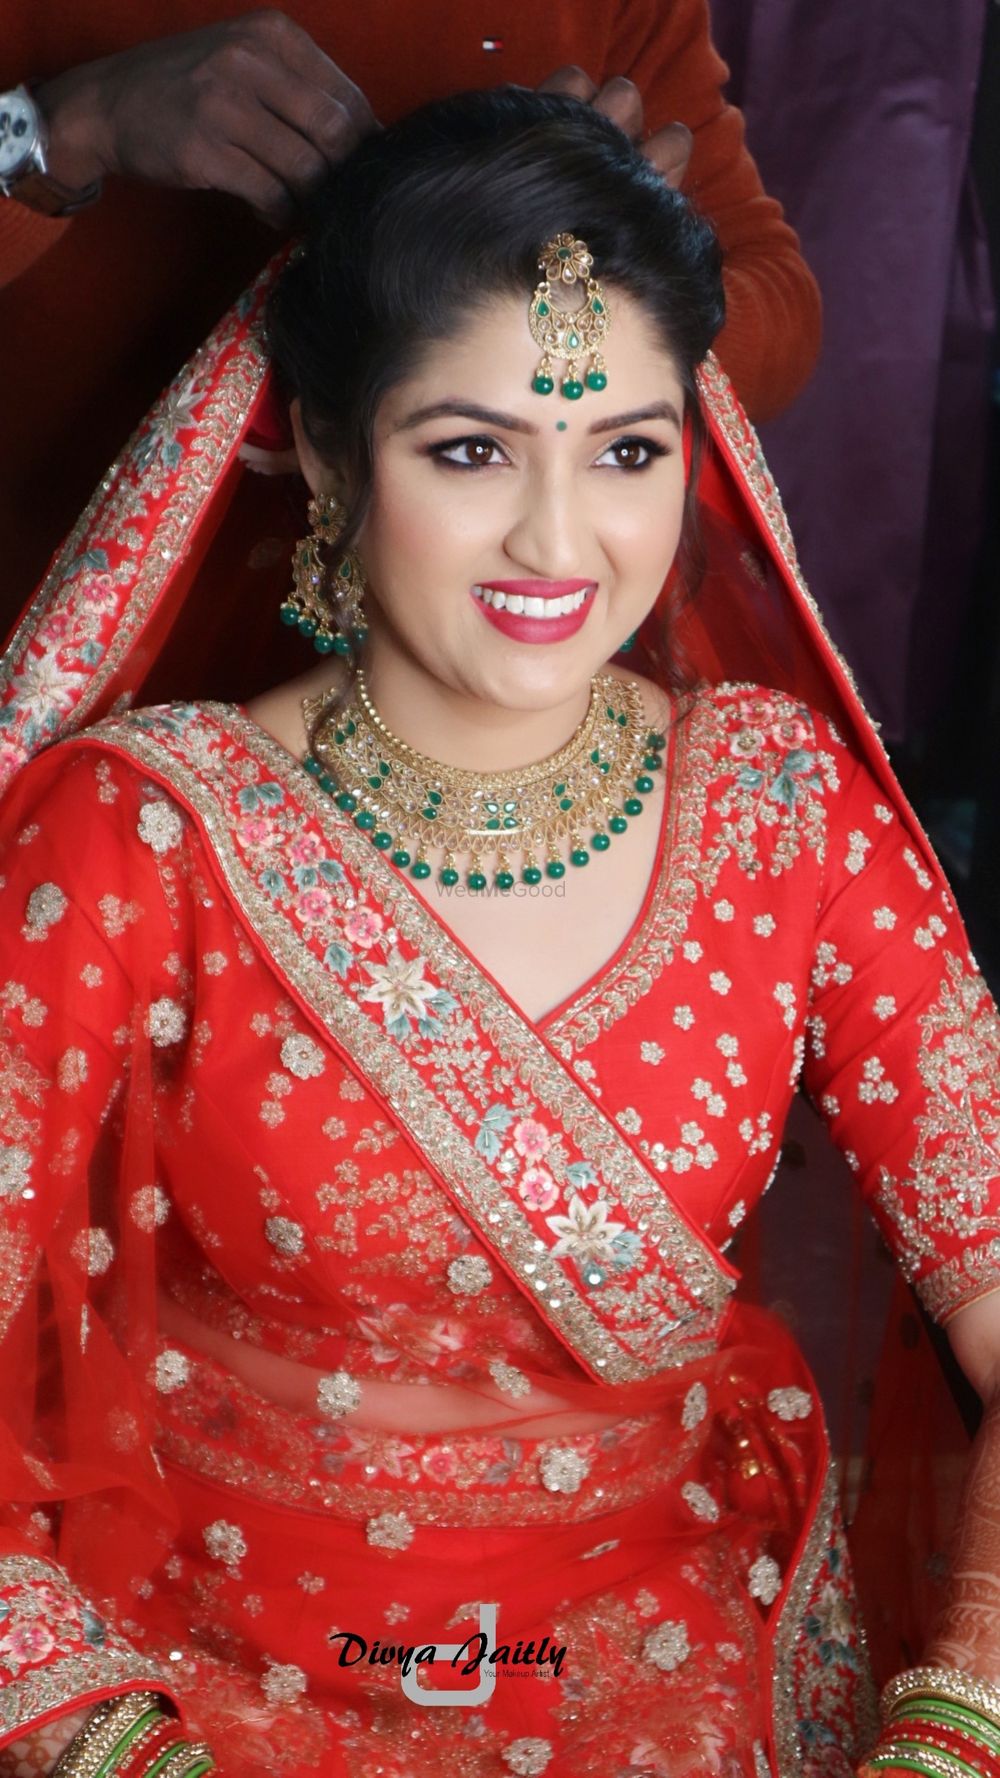 Photo By Divya Jaitly Makeup Artist - Bridal Makeup